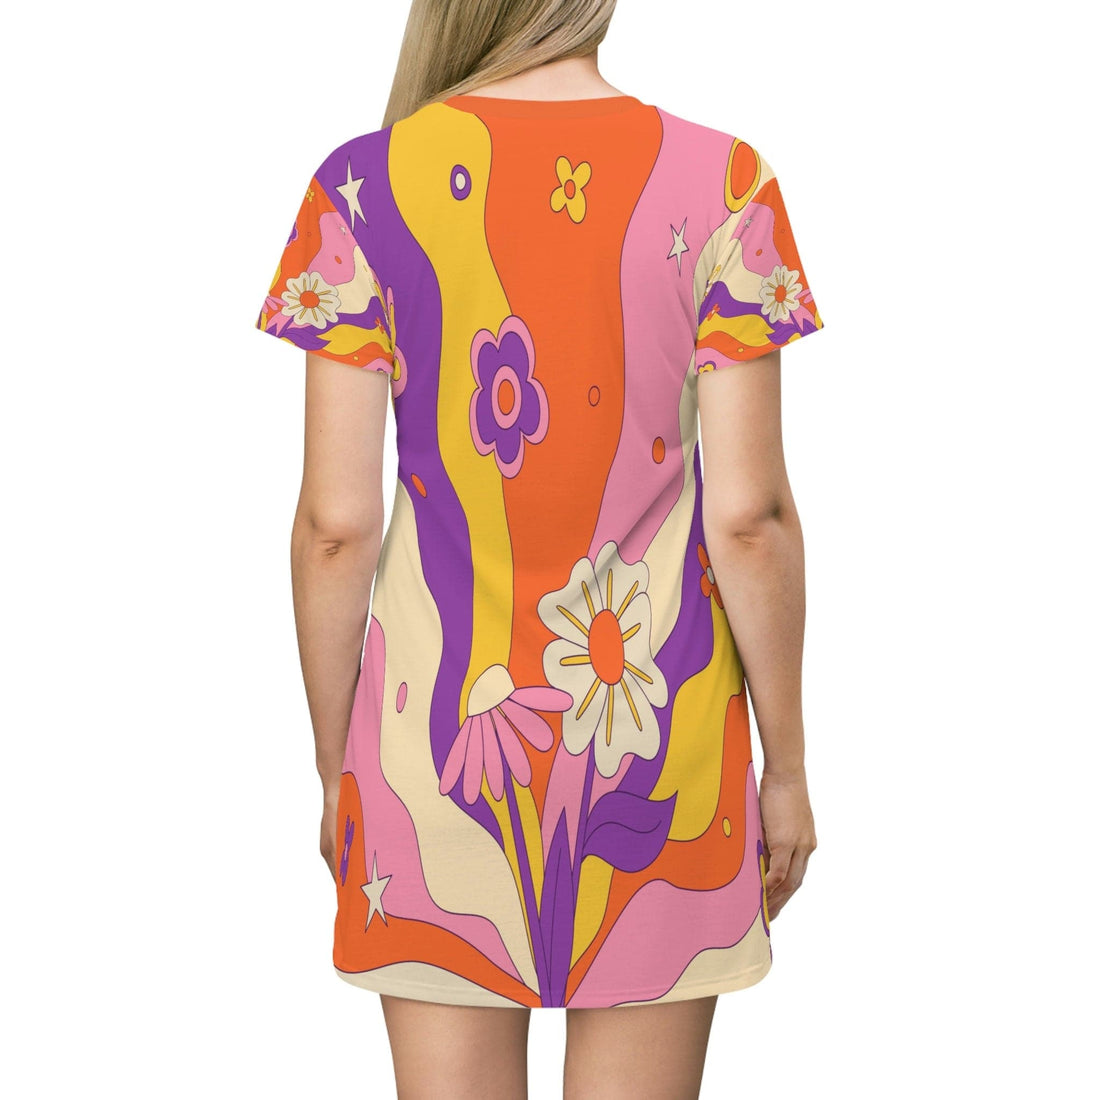 Kate McEnroe New York Retro 60s, 70s Groovy Hippie Flower Power Boho Party Dress in Mid Century Modern Beige, Burnt Orange, Mustard Yellow, Purple, Pink T-Shirt Dress S 21474881676877458734